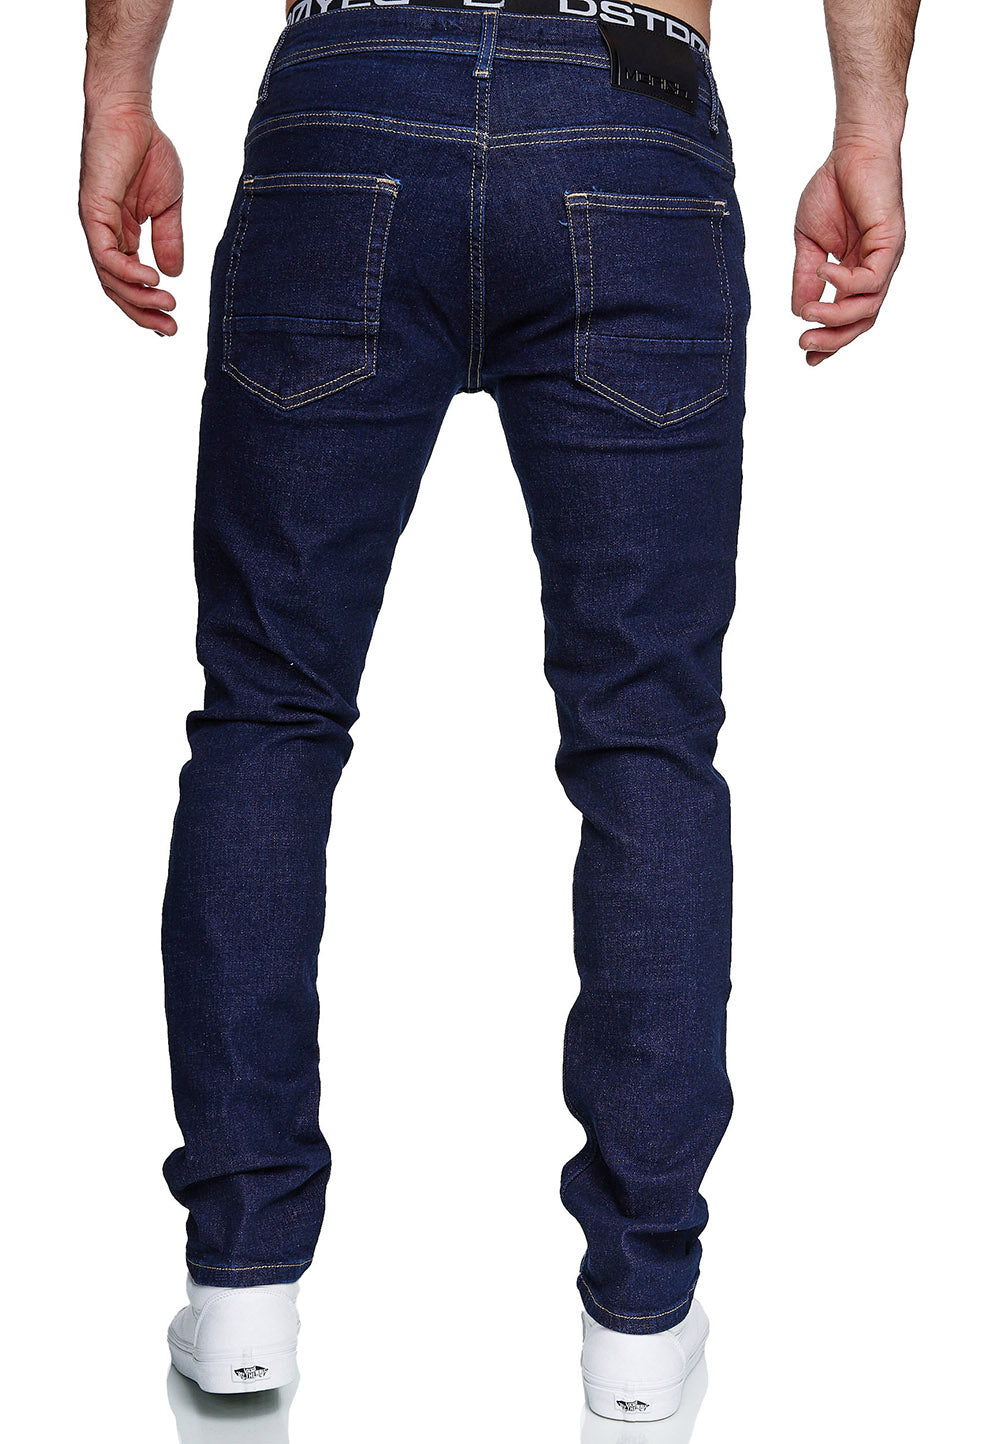 (1512)/1509 jeans Raw blau